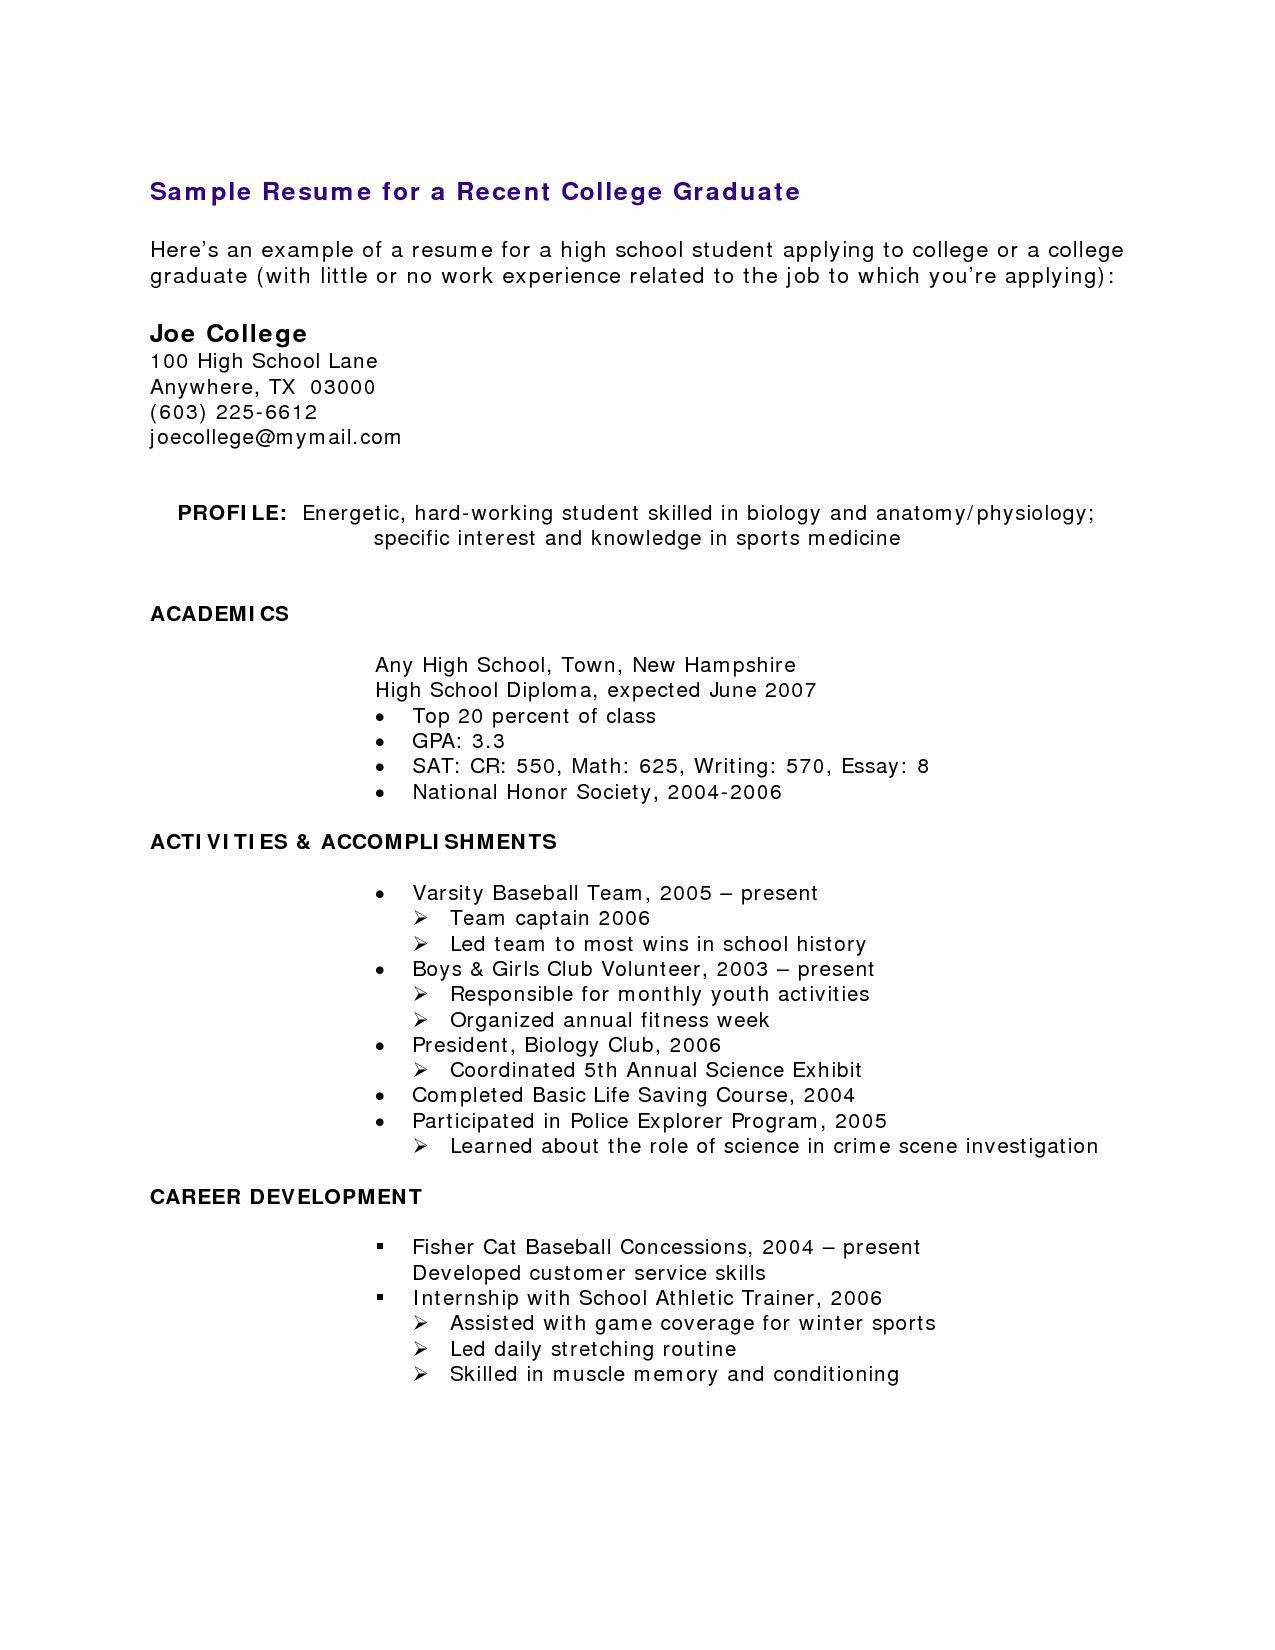 Sample Resume for Highschool Graduate with No Work Experience Fresh Computer Science Cv : Holi Holi Holi Sample Of Cv for Job …